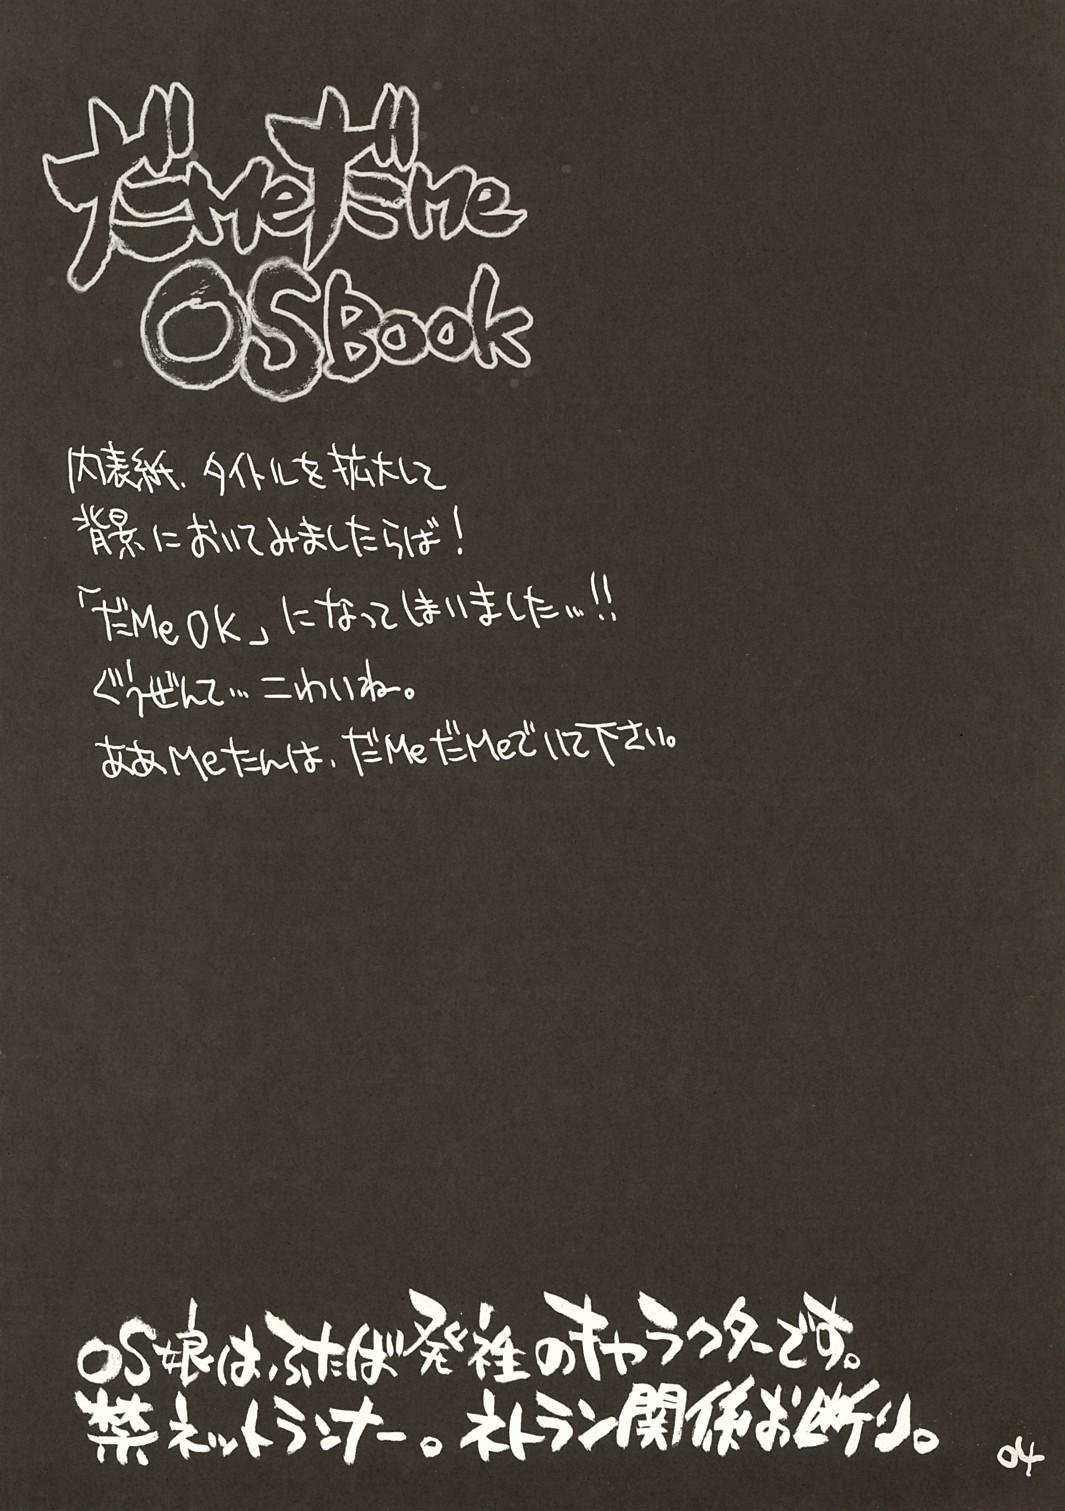 Blackdick daMe daMe OS Book - Os tan Upskirt - Page 3